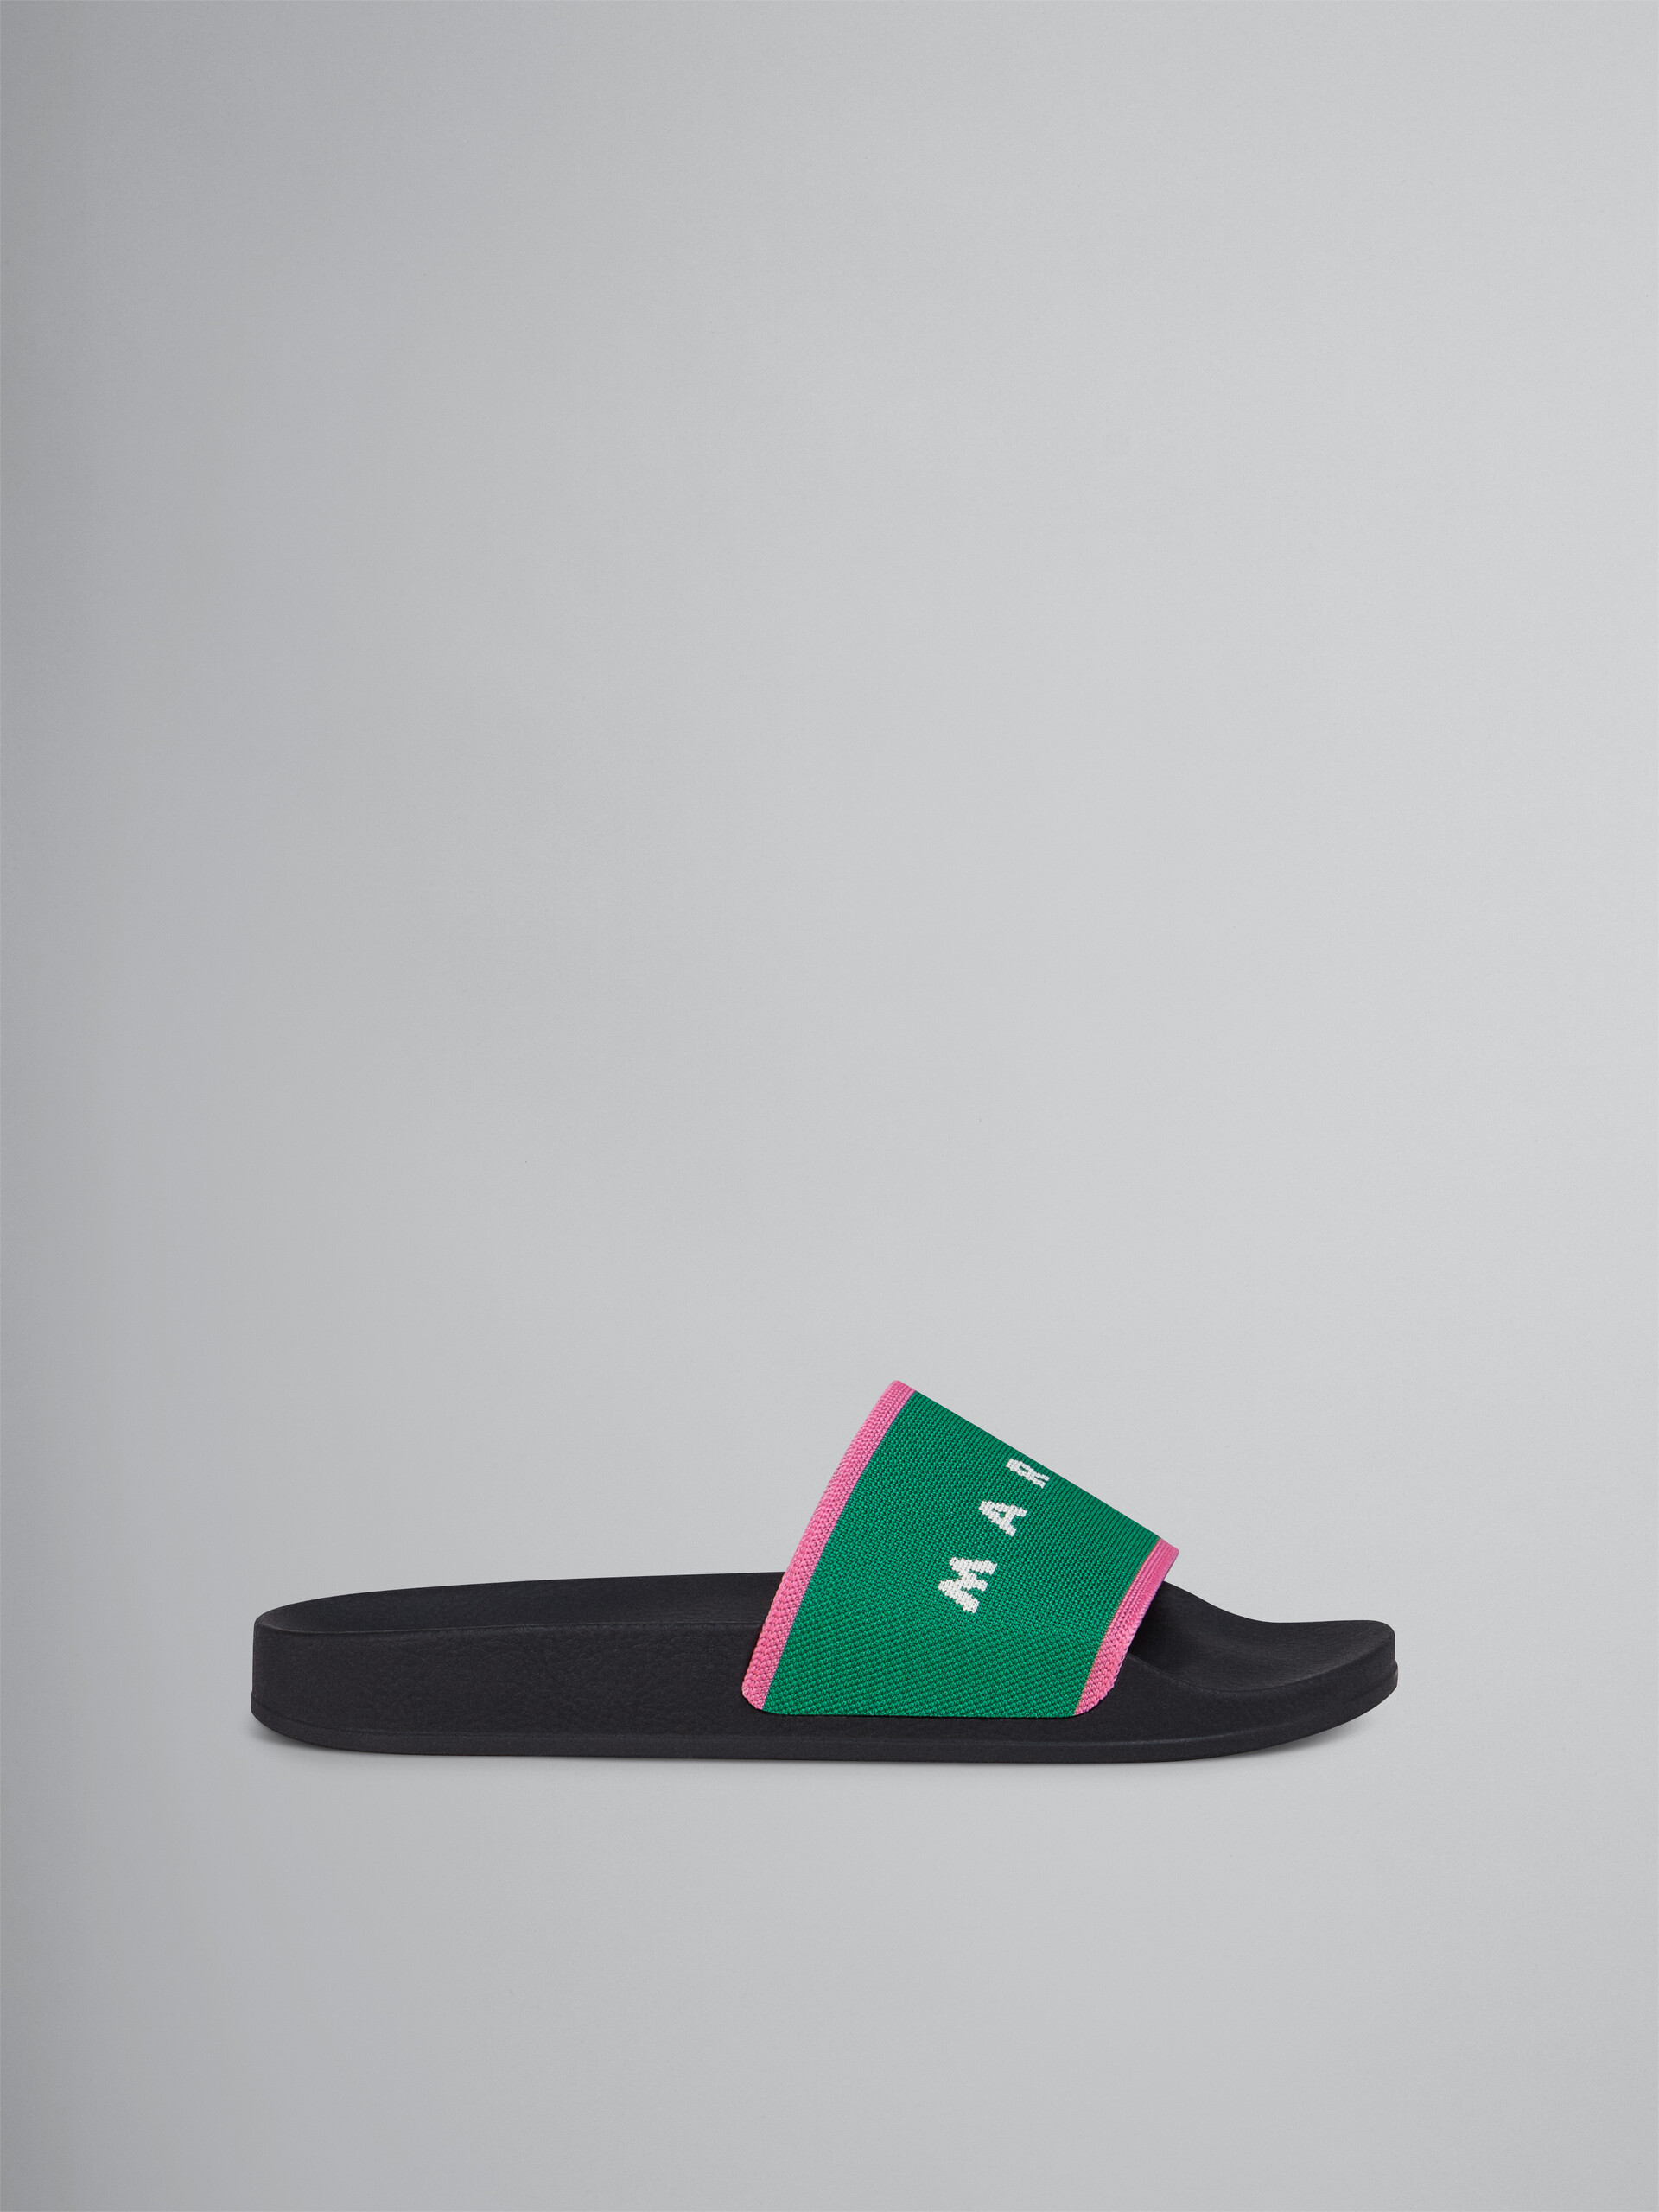 Green and pink stretch logo jacquard slide - Sandals - Image 1